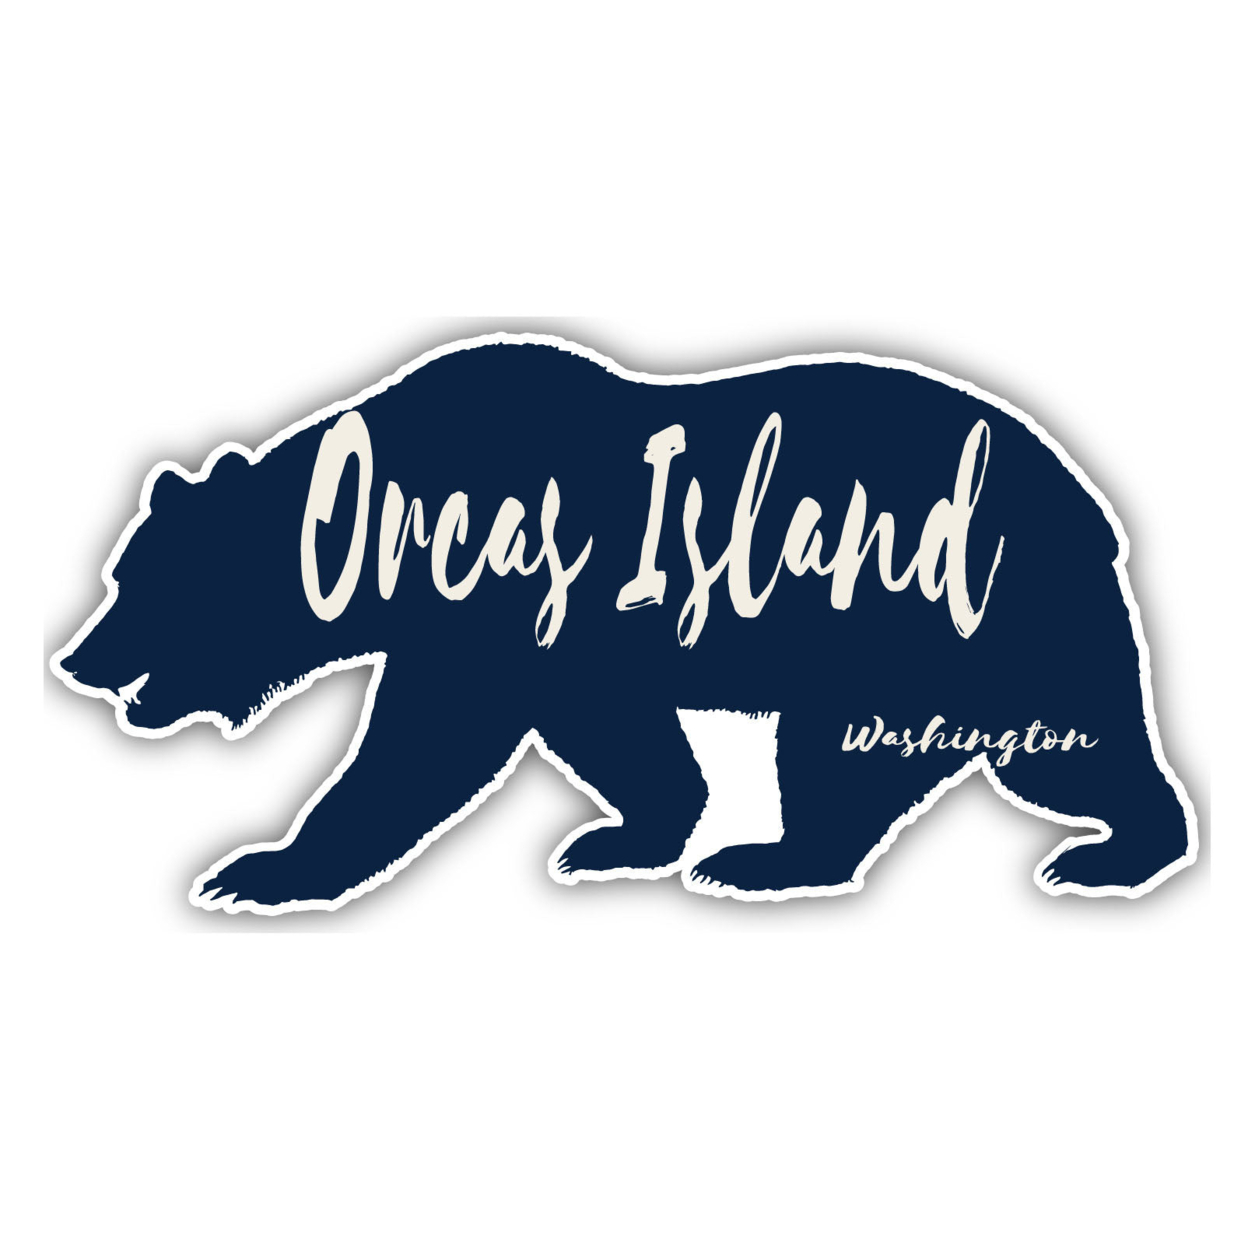 Orcas Island Washington Souvenir Decorative Stickers (Choose Theme And Size) - Single Unit, 4-Inch, Camp Life